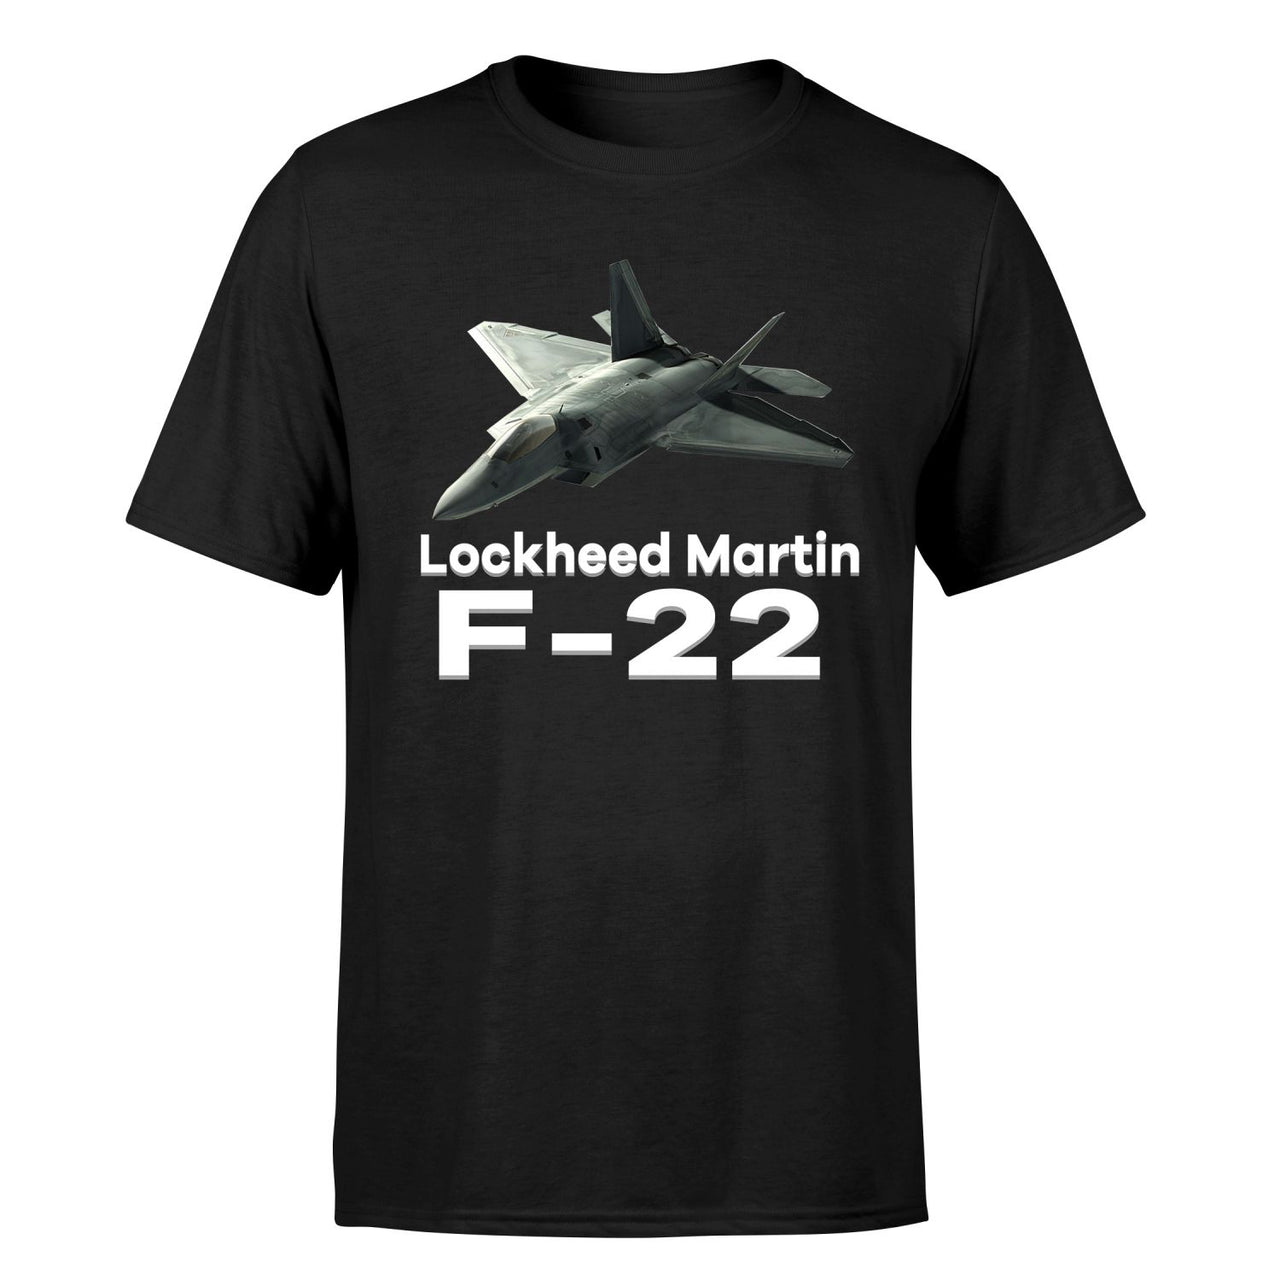 The Lockheed Martin F22 Designed T-Shirts